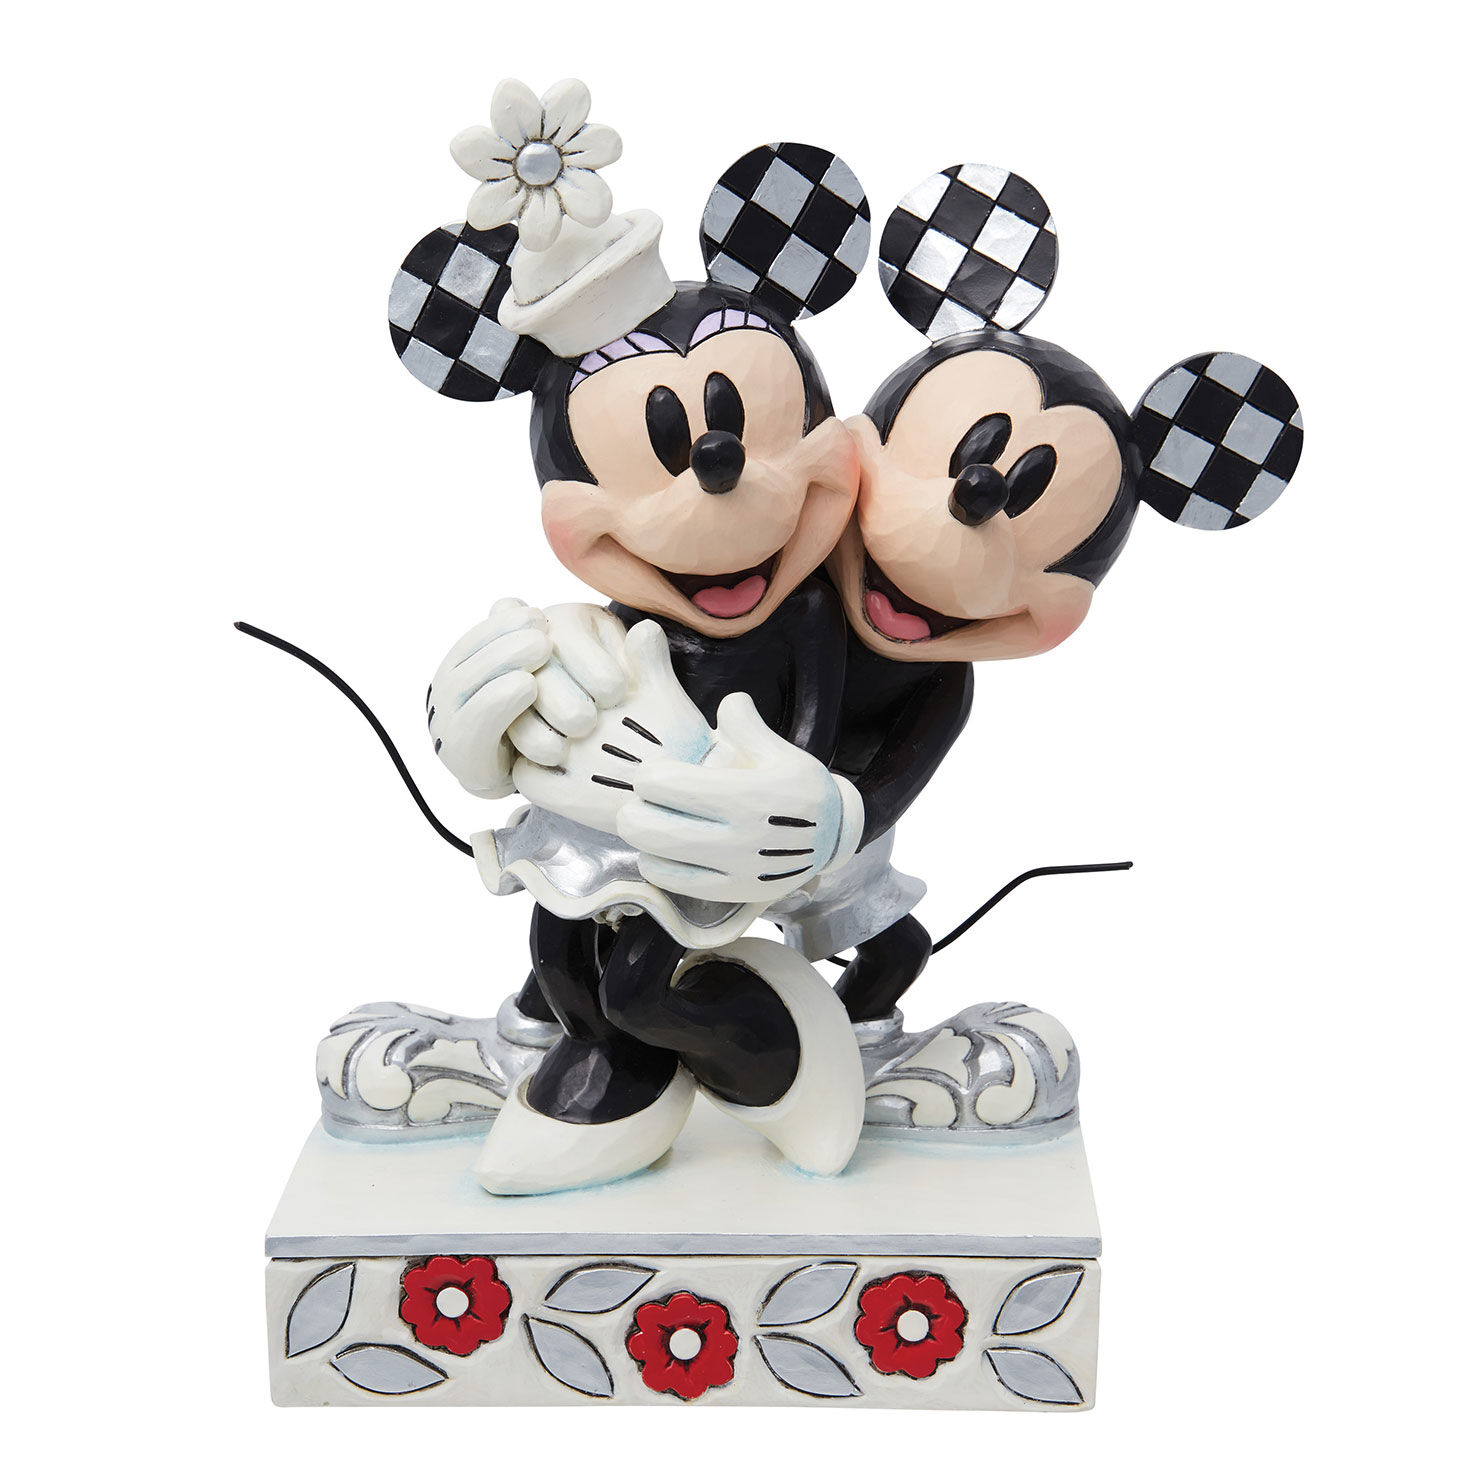 Happy Birthday, Mickey Mouse! Iconic Disney mascot turns 94 today